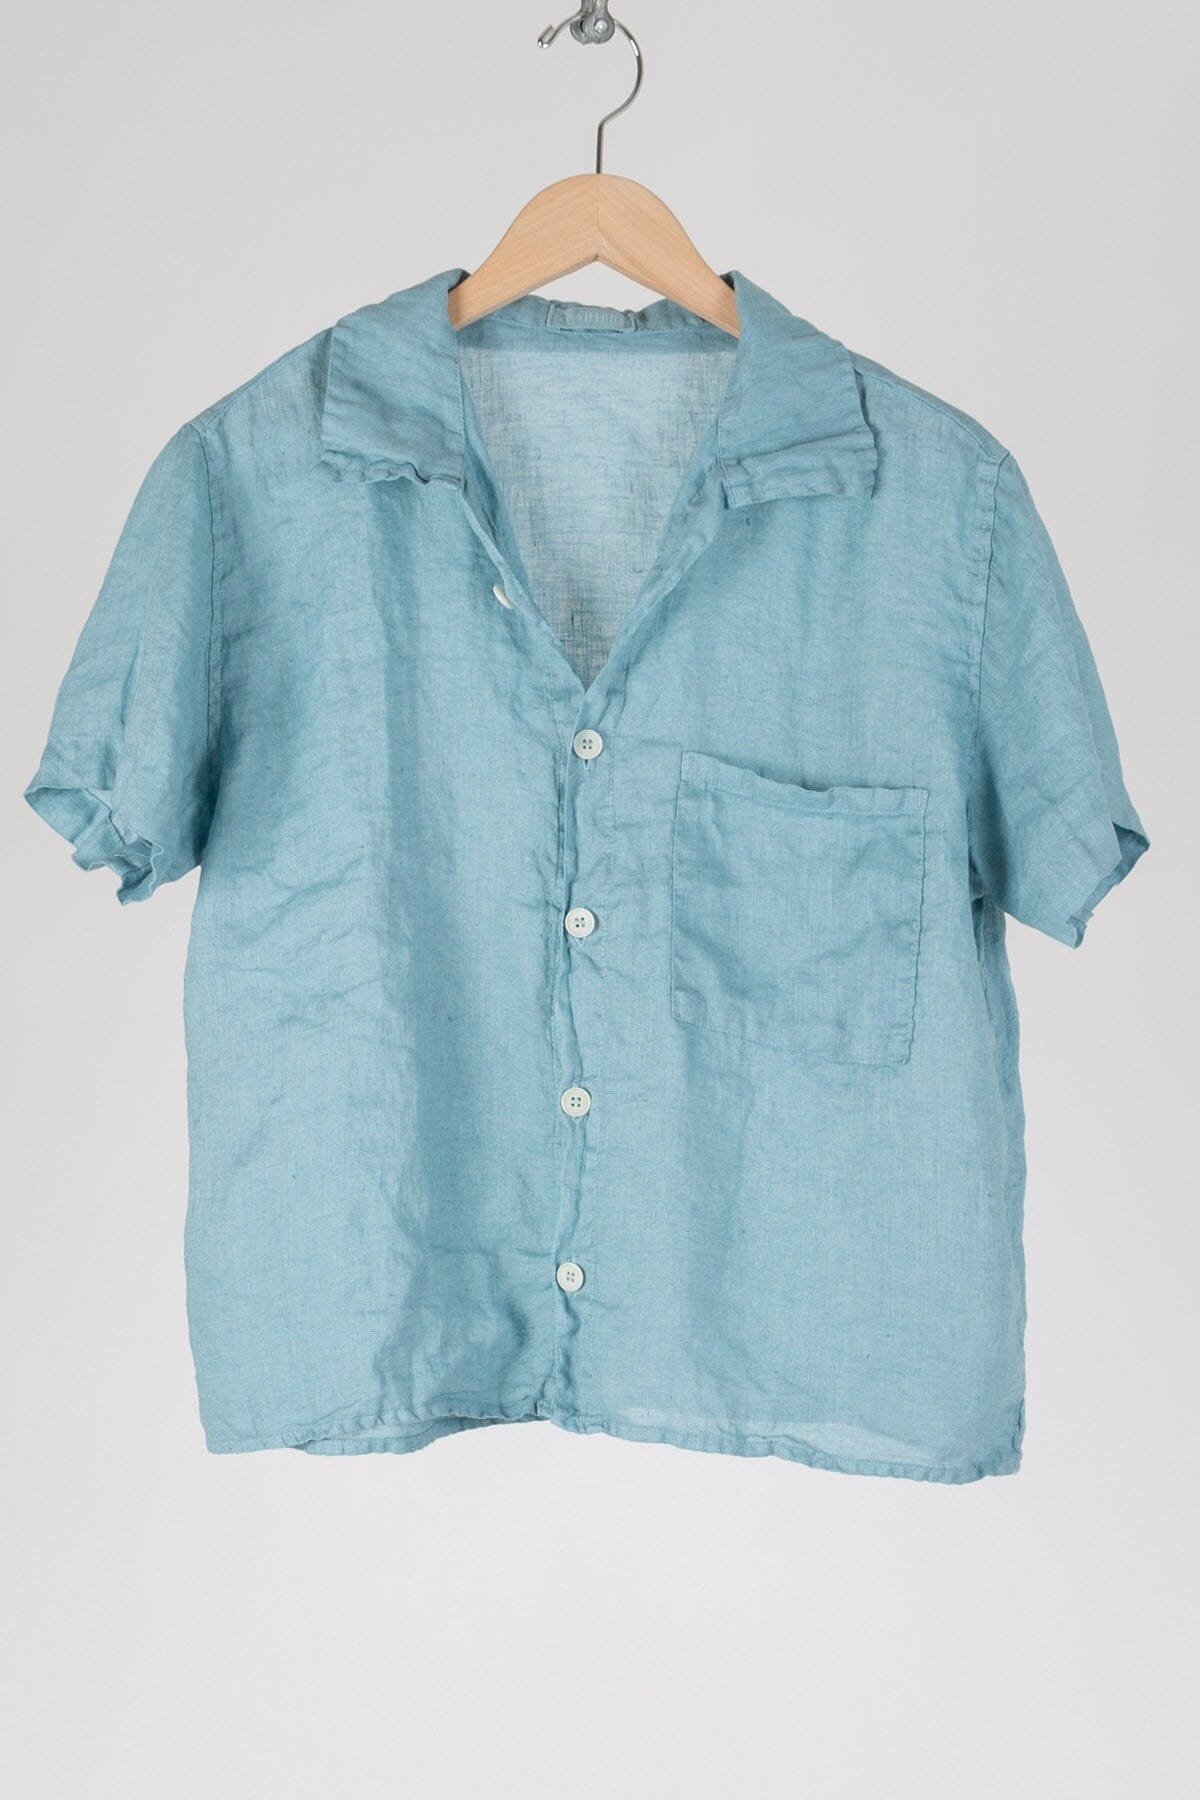 Nic - Linen S10 - Linen Shirt/Top/Tunic CP Shades turkish blue